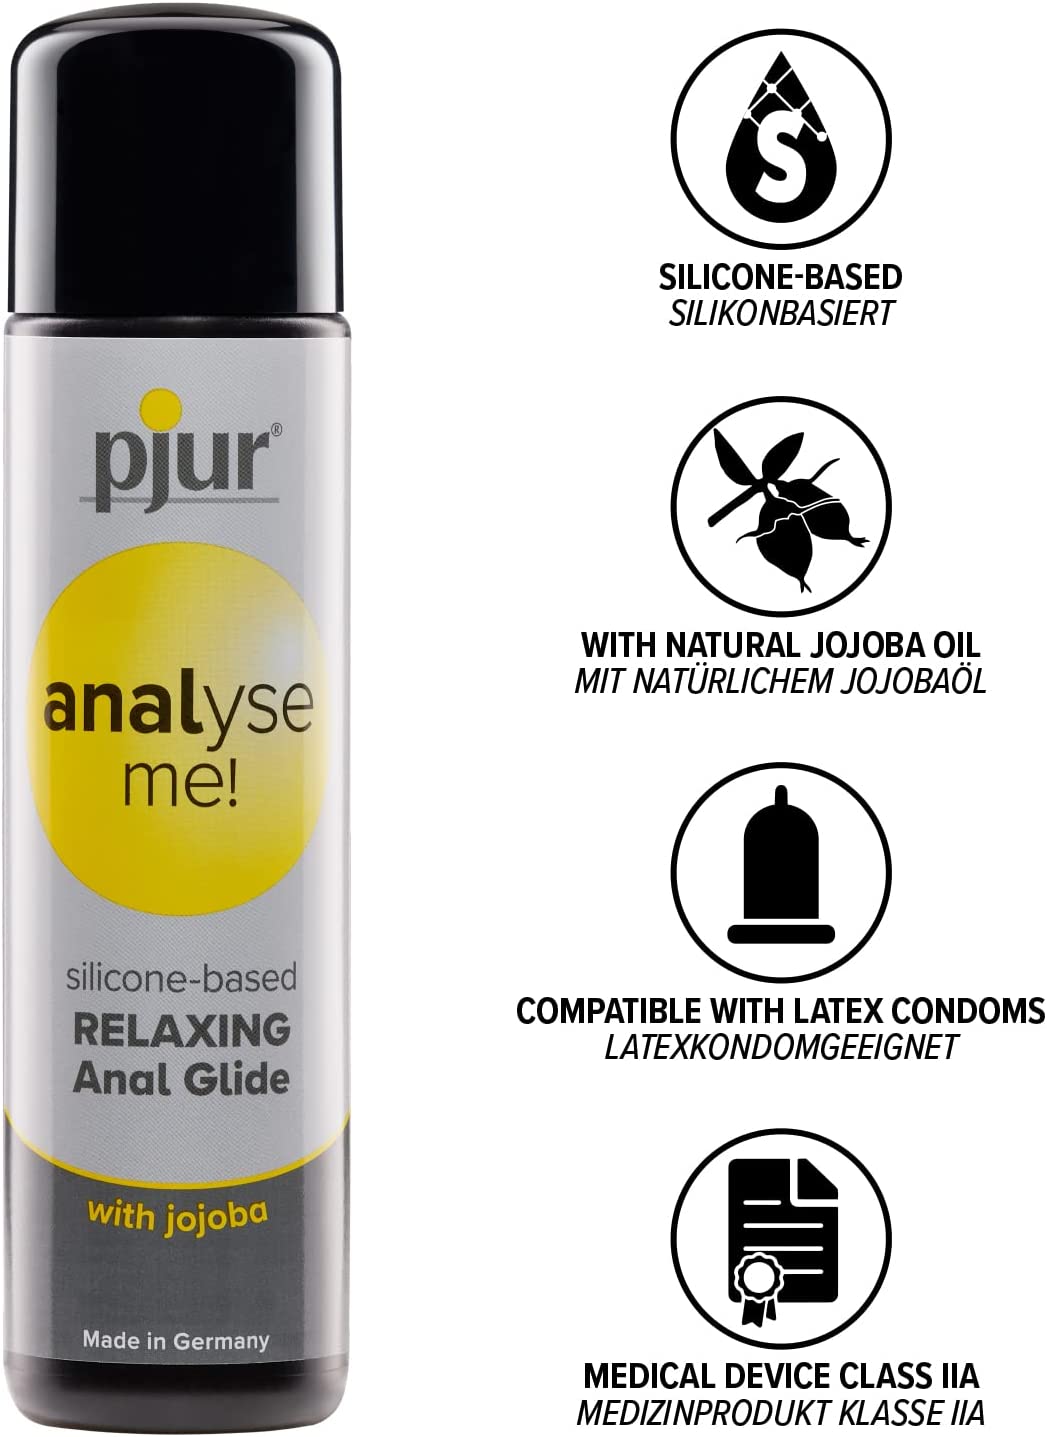 Pjur 分析我！ Relaxing - 用于舒适肛交的硅基个人润滑剂 - 超长润滑（100 毫升） 